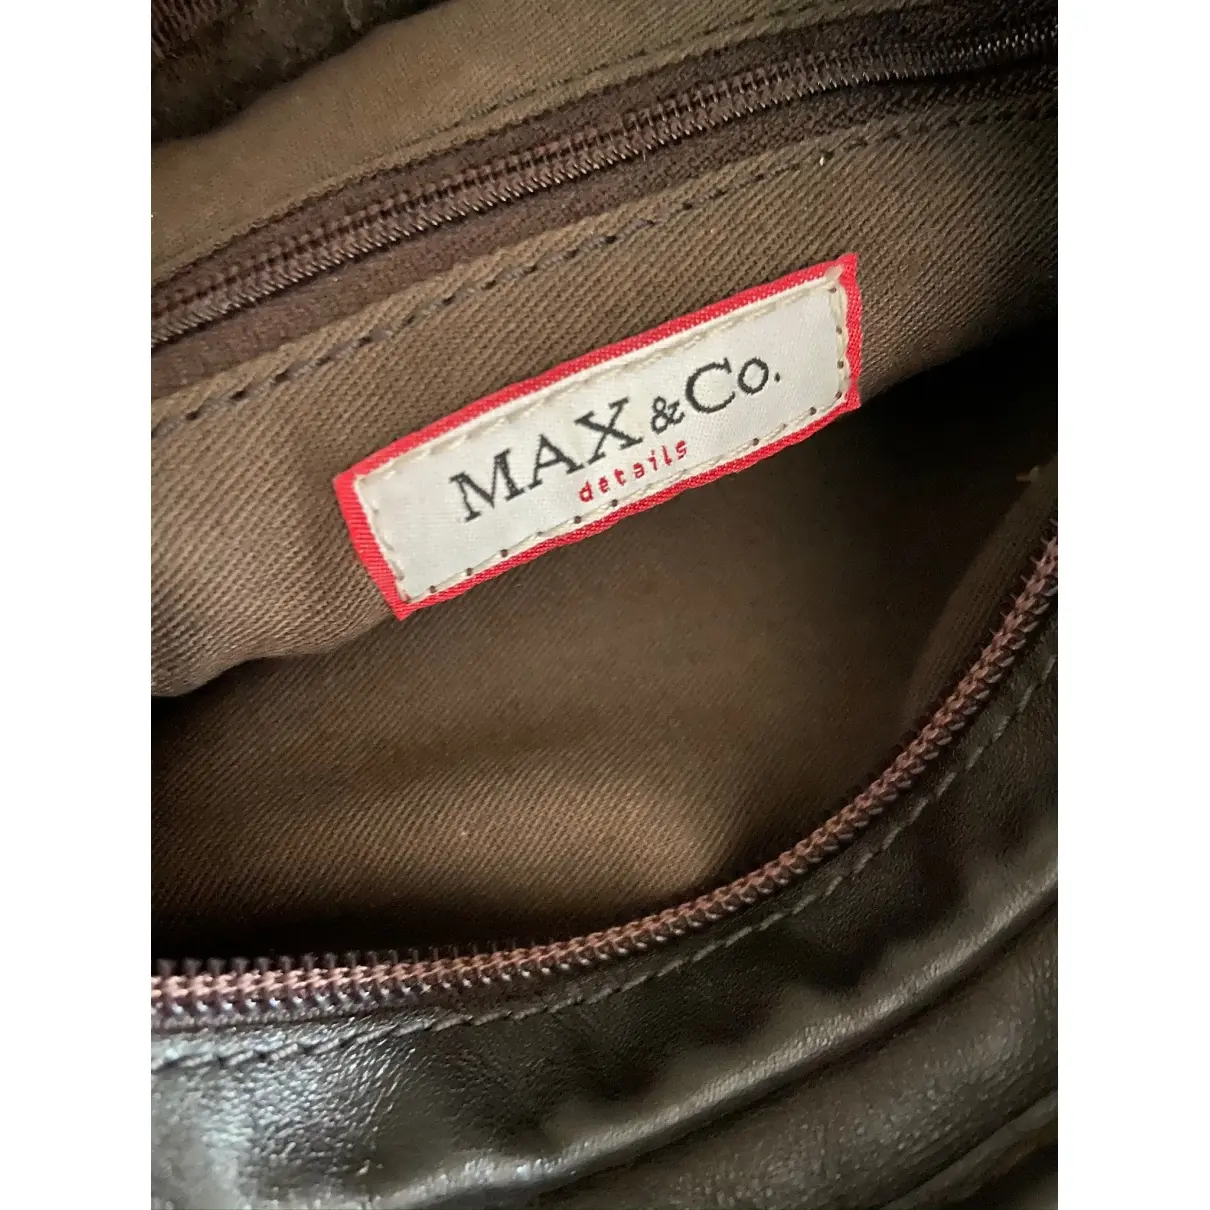 Luxury Max & Co Handbags Women